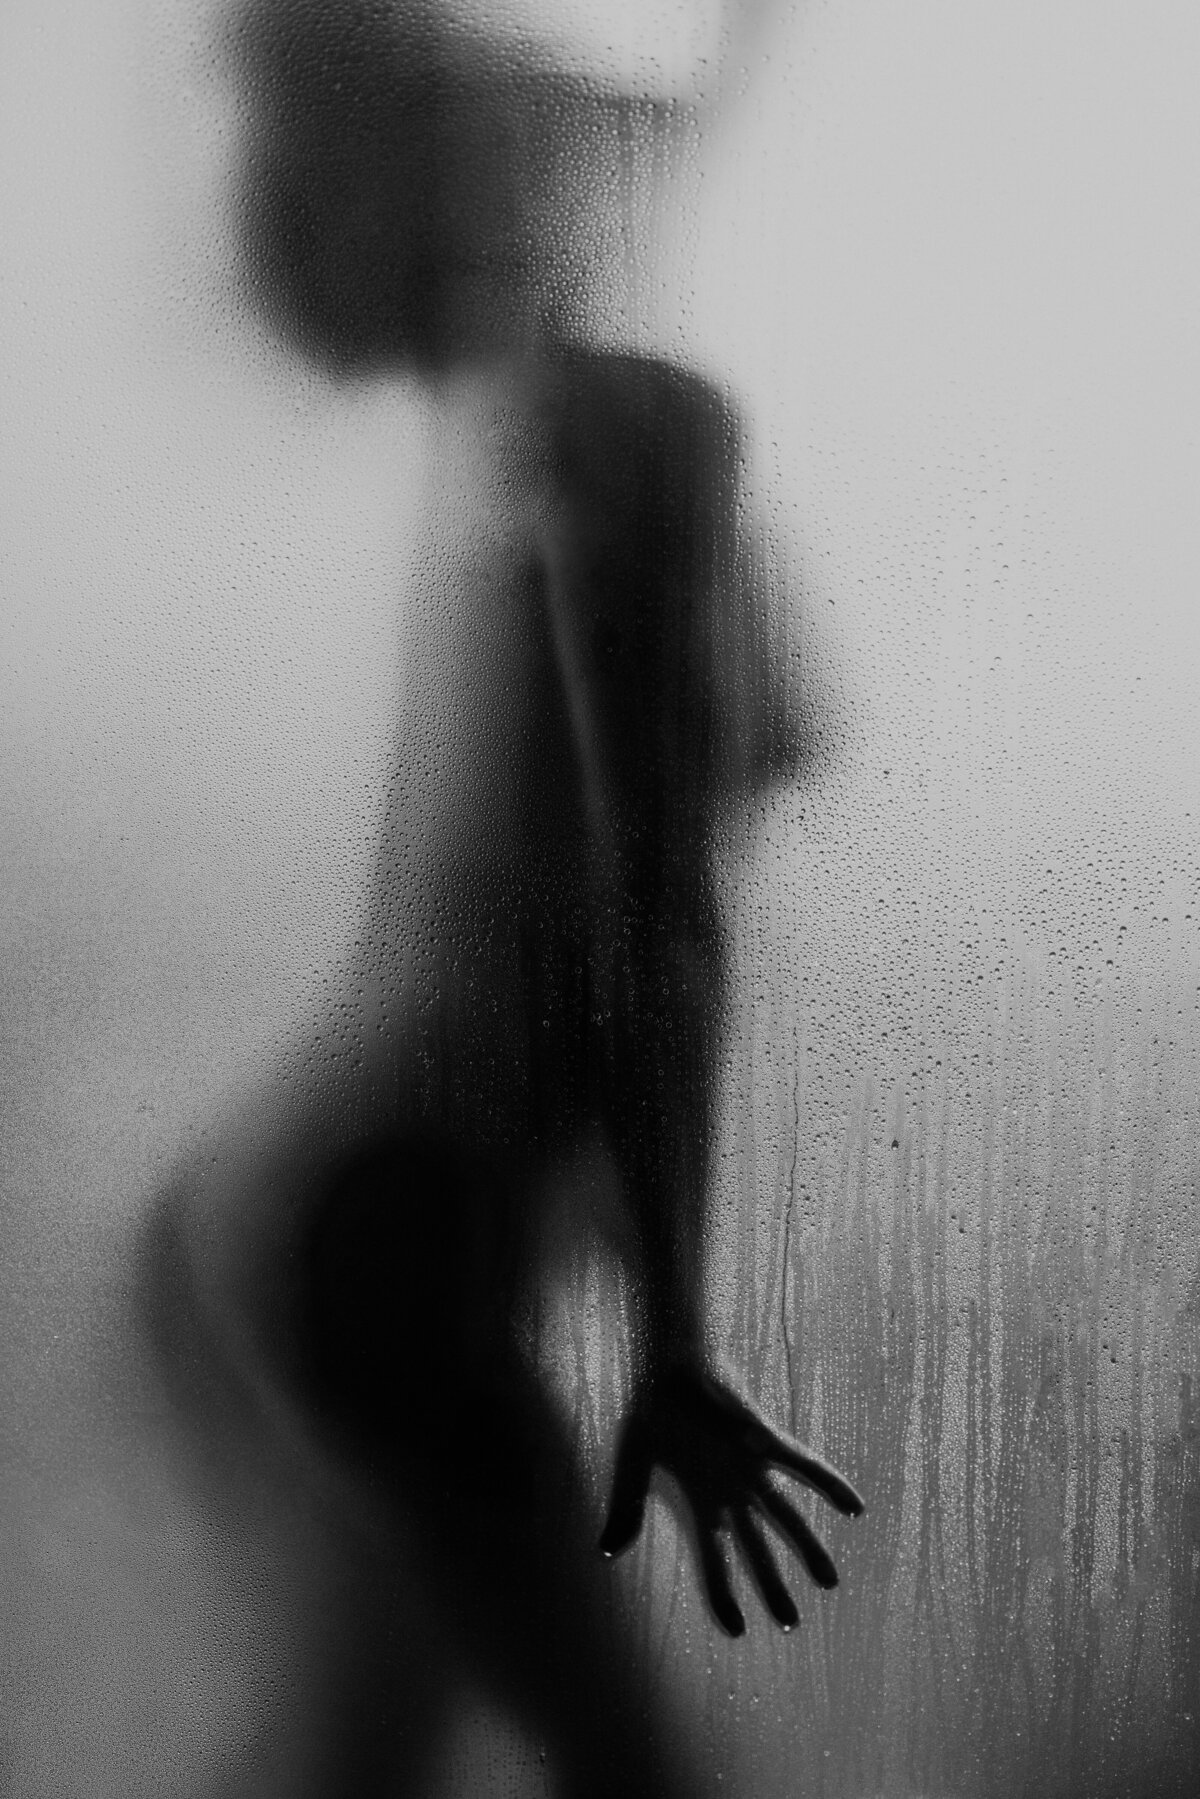 Female silhouette behind a shower door